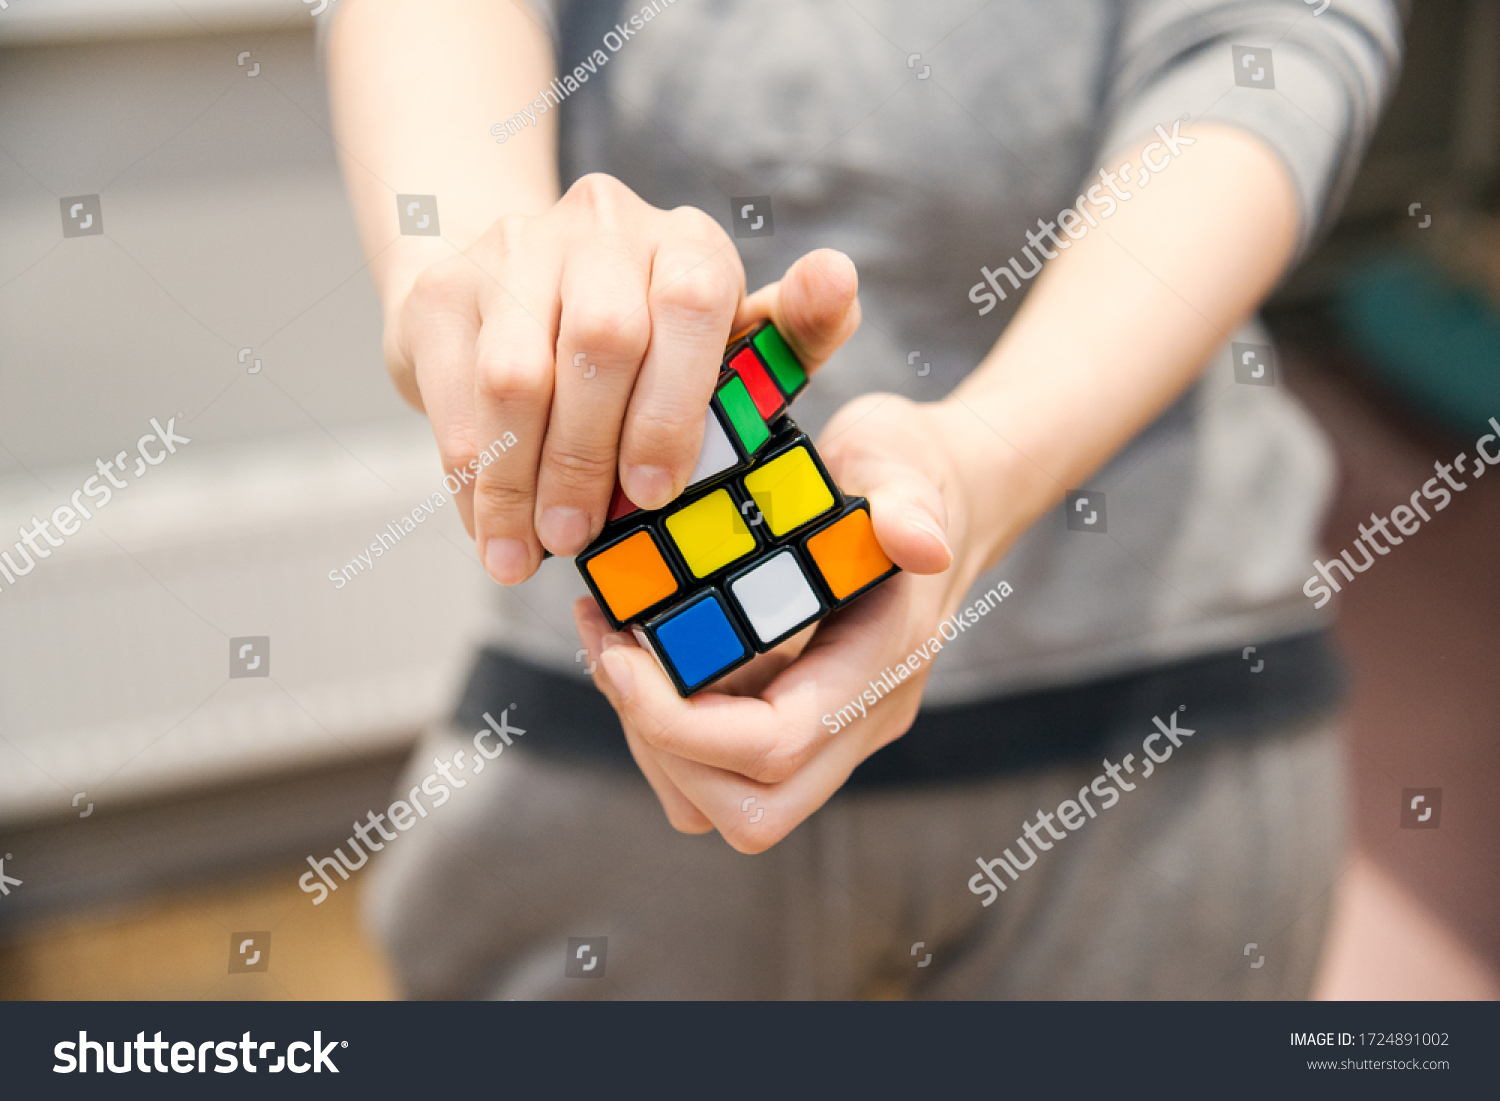 female hands holding a rubik's cube #1724891002